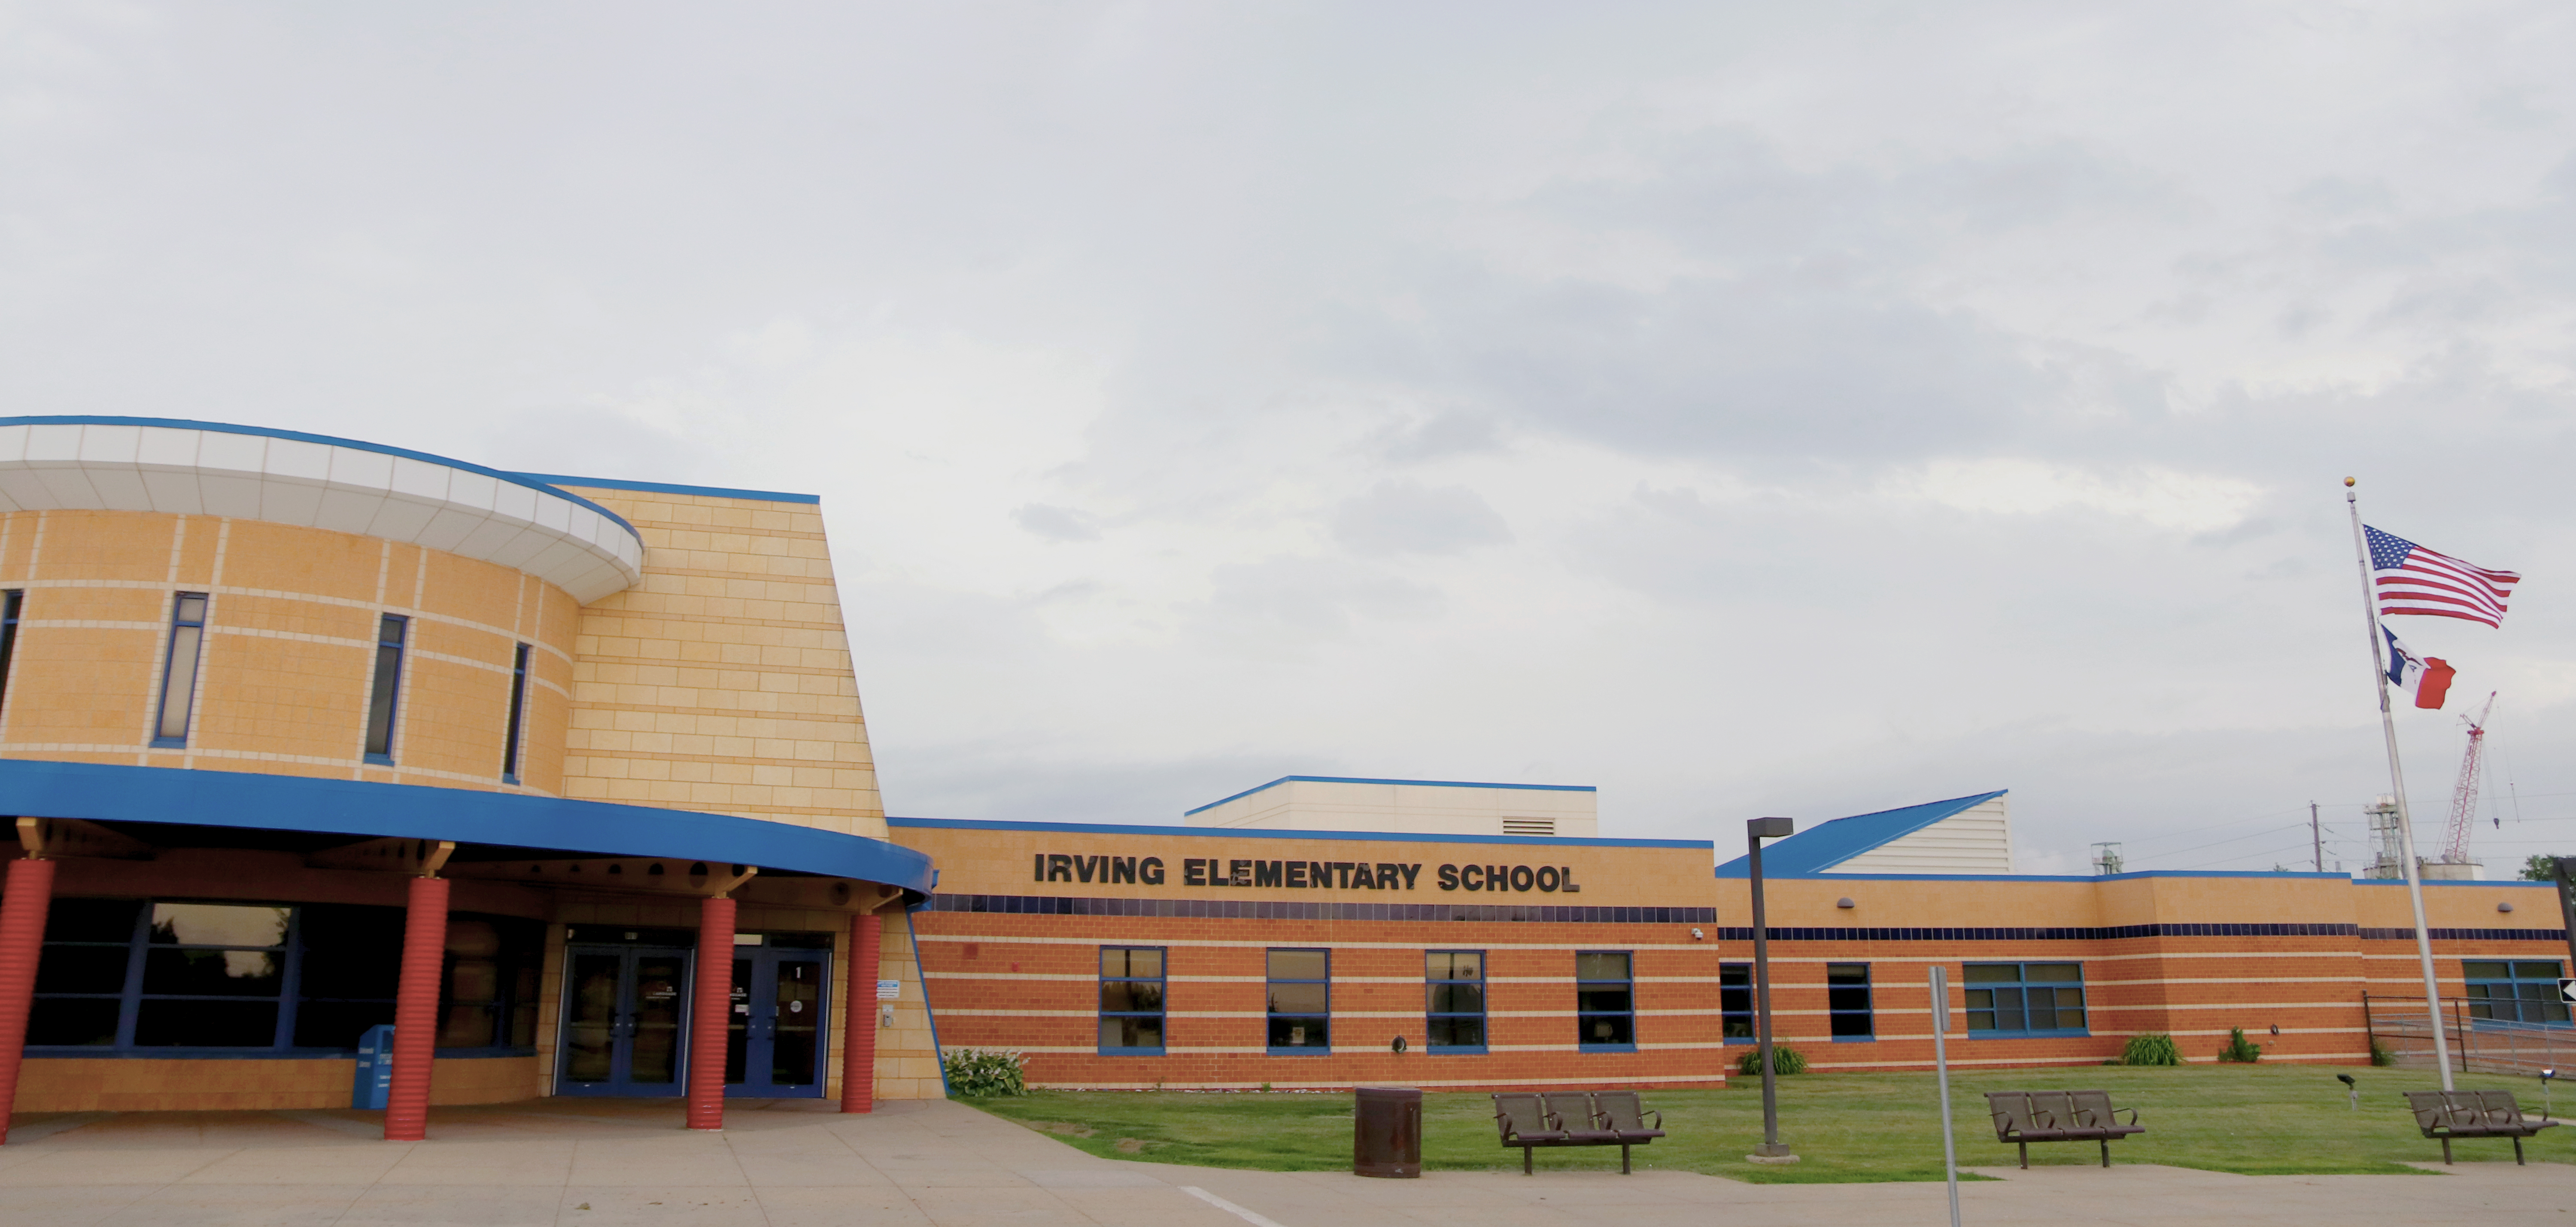 Exterior of Irving Elementary school building